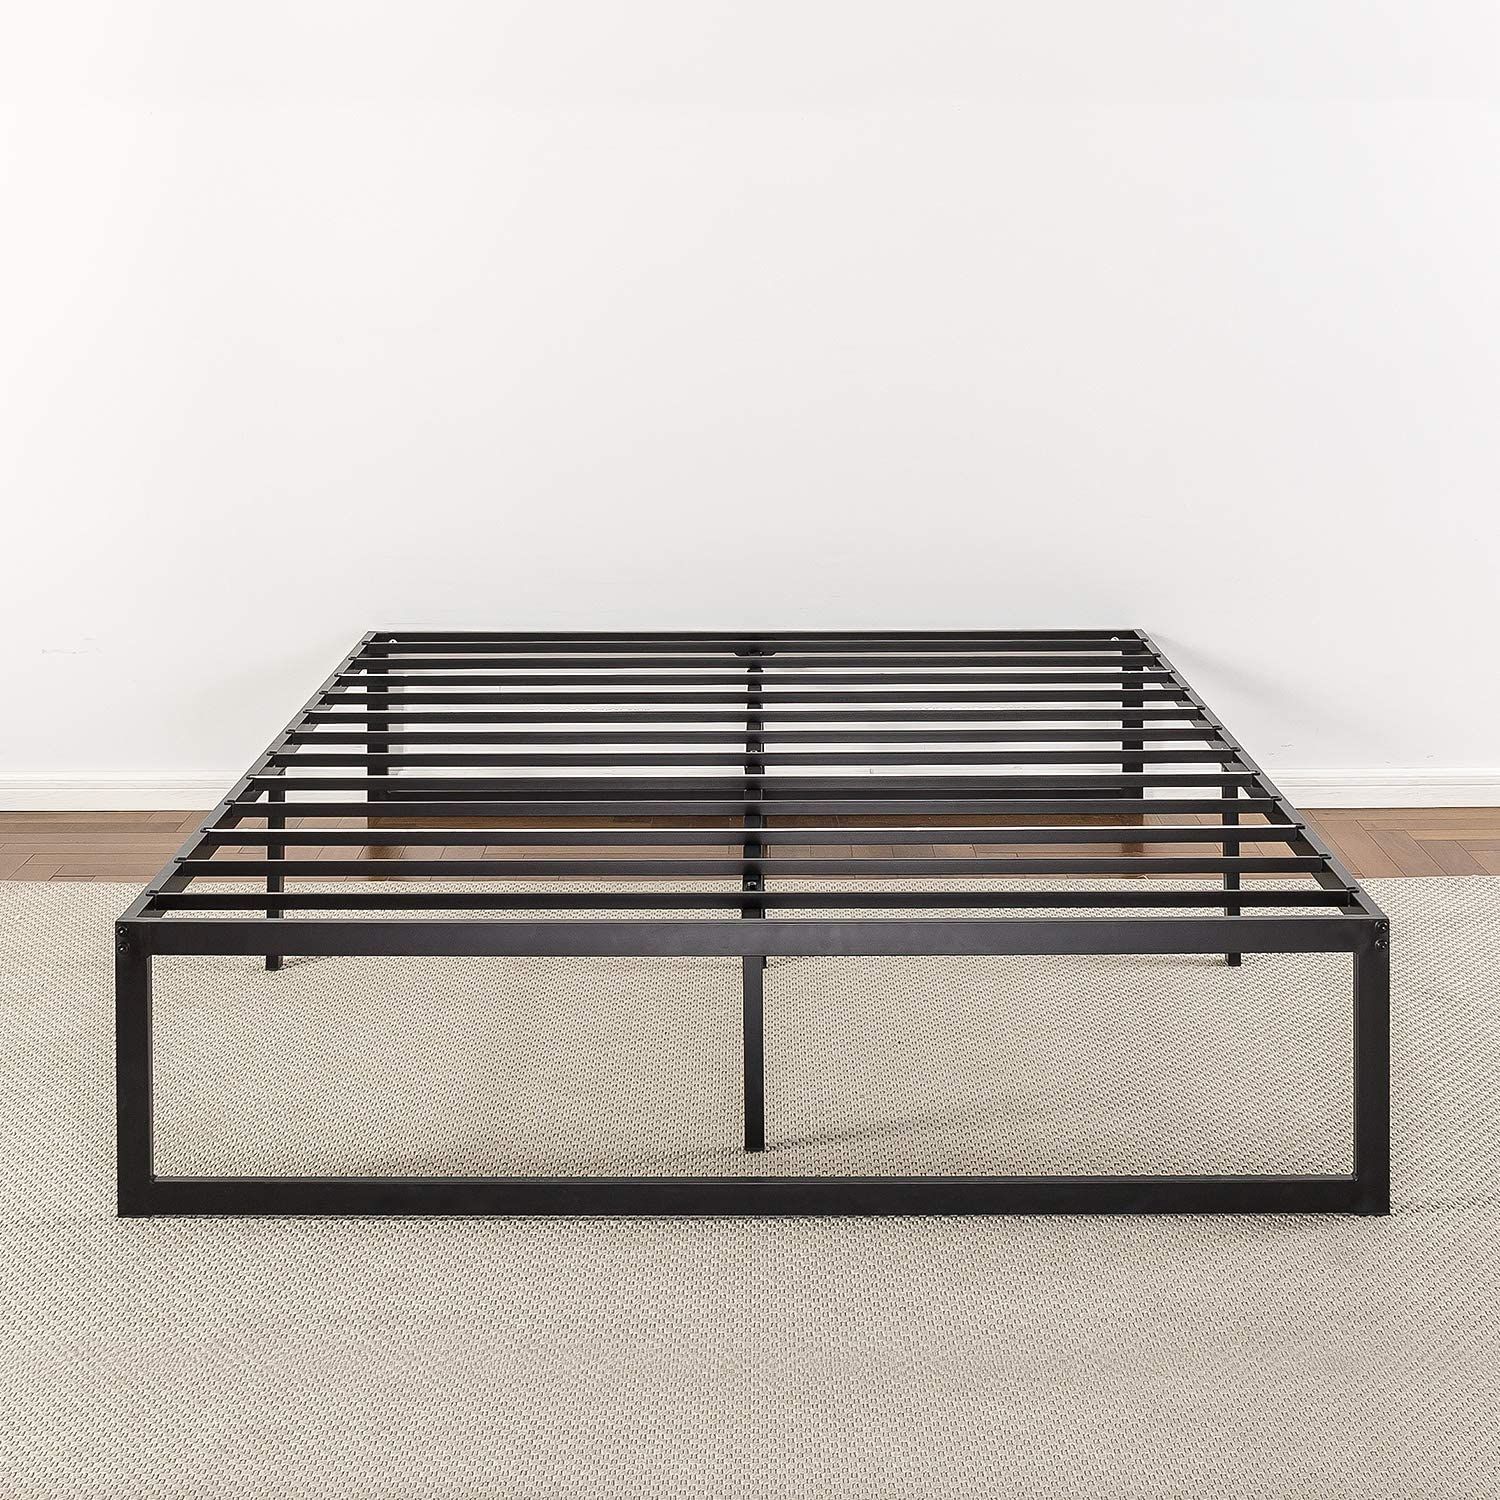 19 Best Metal Bed Frames 2020 The, Low Profile Metal Bed Frame